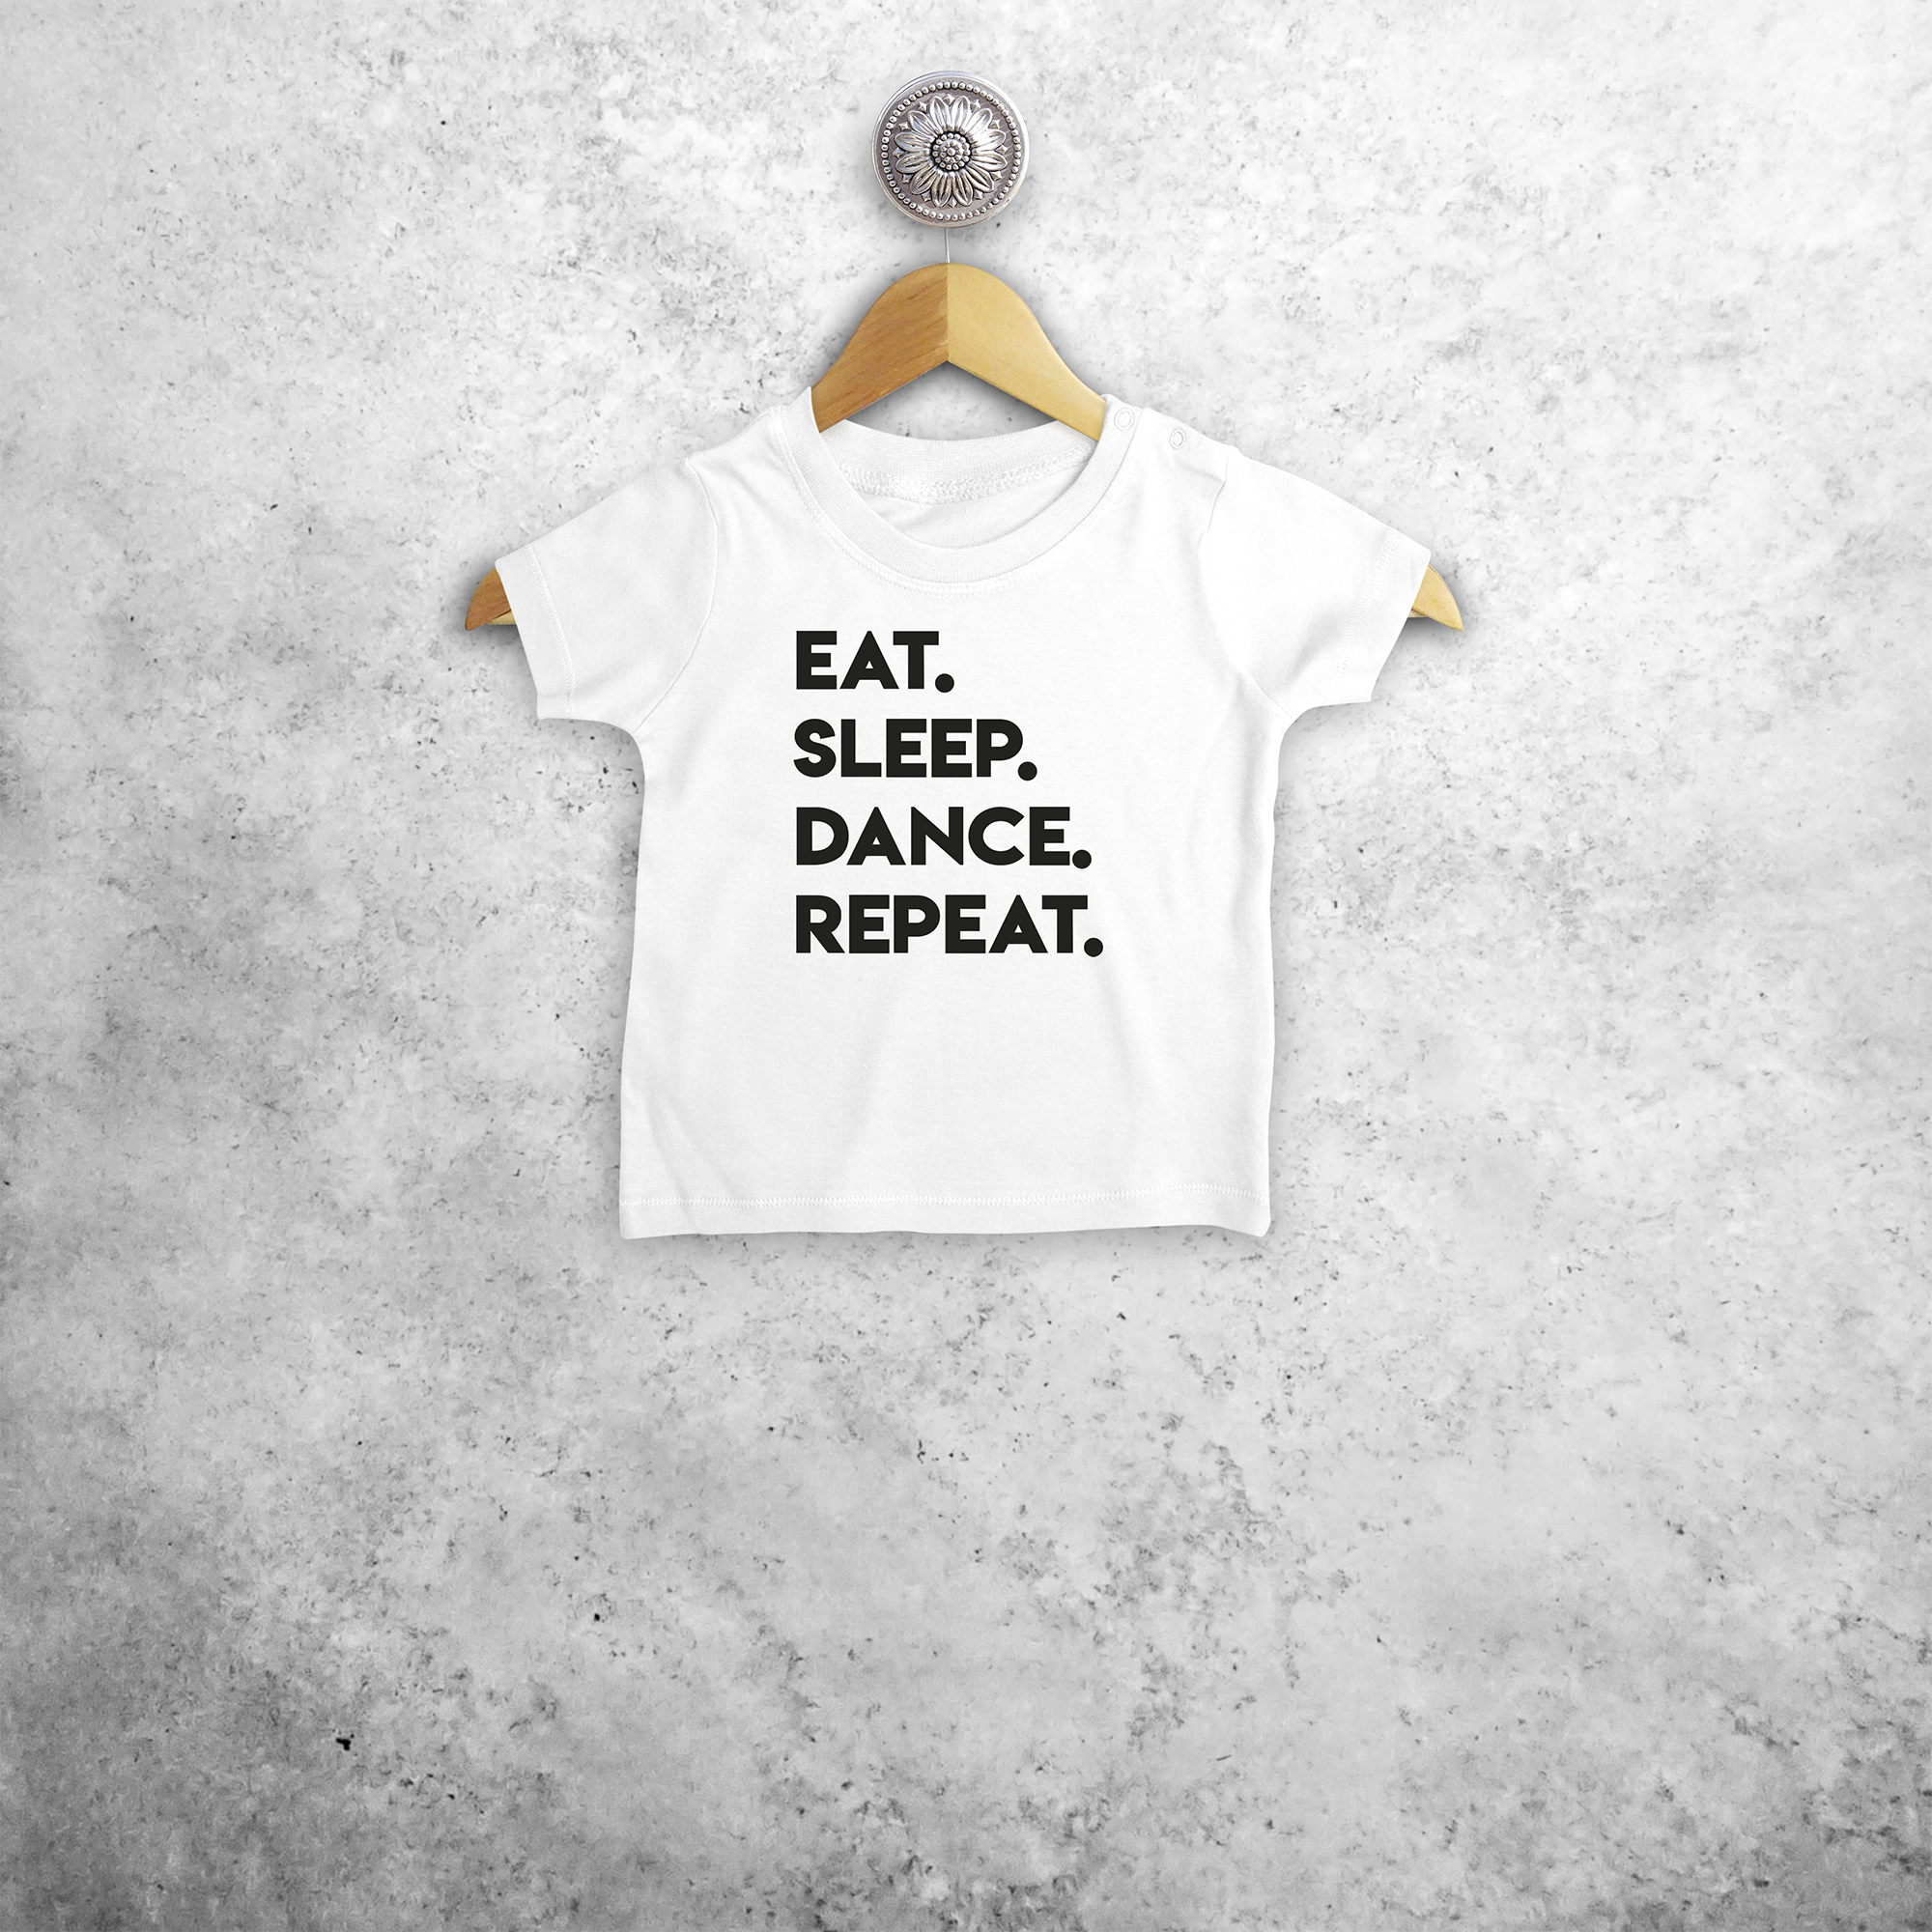 'Eat. Sleep. Dance. Repeat.' baby shortsleeve shirt